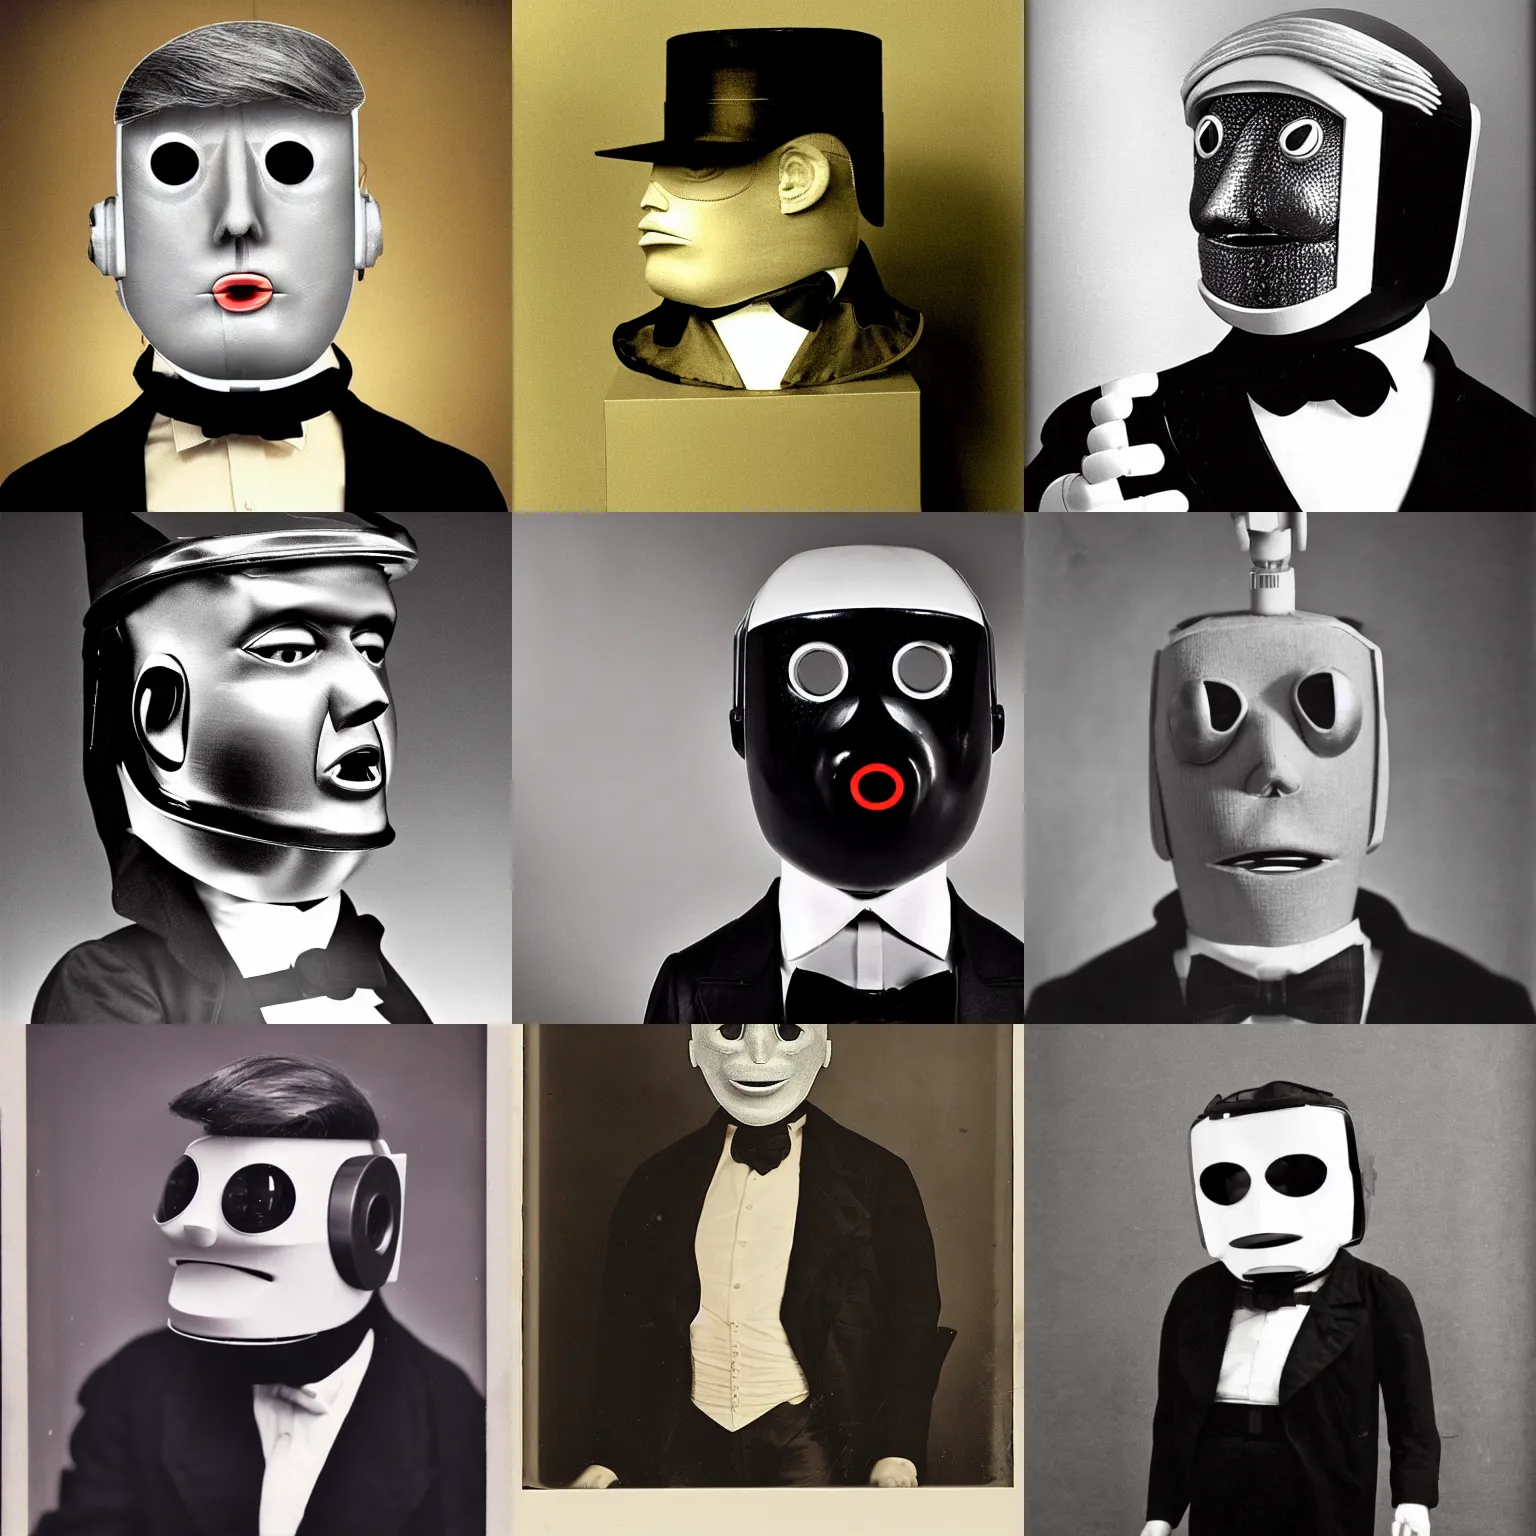 Prompt: Donald Trump portraits of a anthropomorphic-robot cyber-face techno mask in black tie suit retro photo by Louis Daguerre